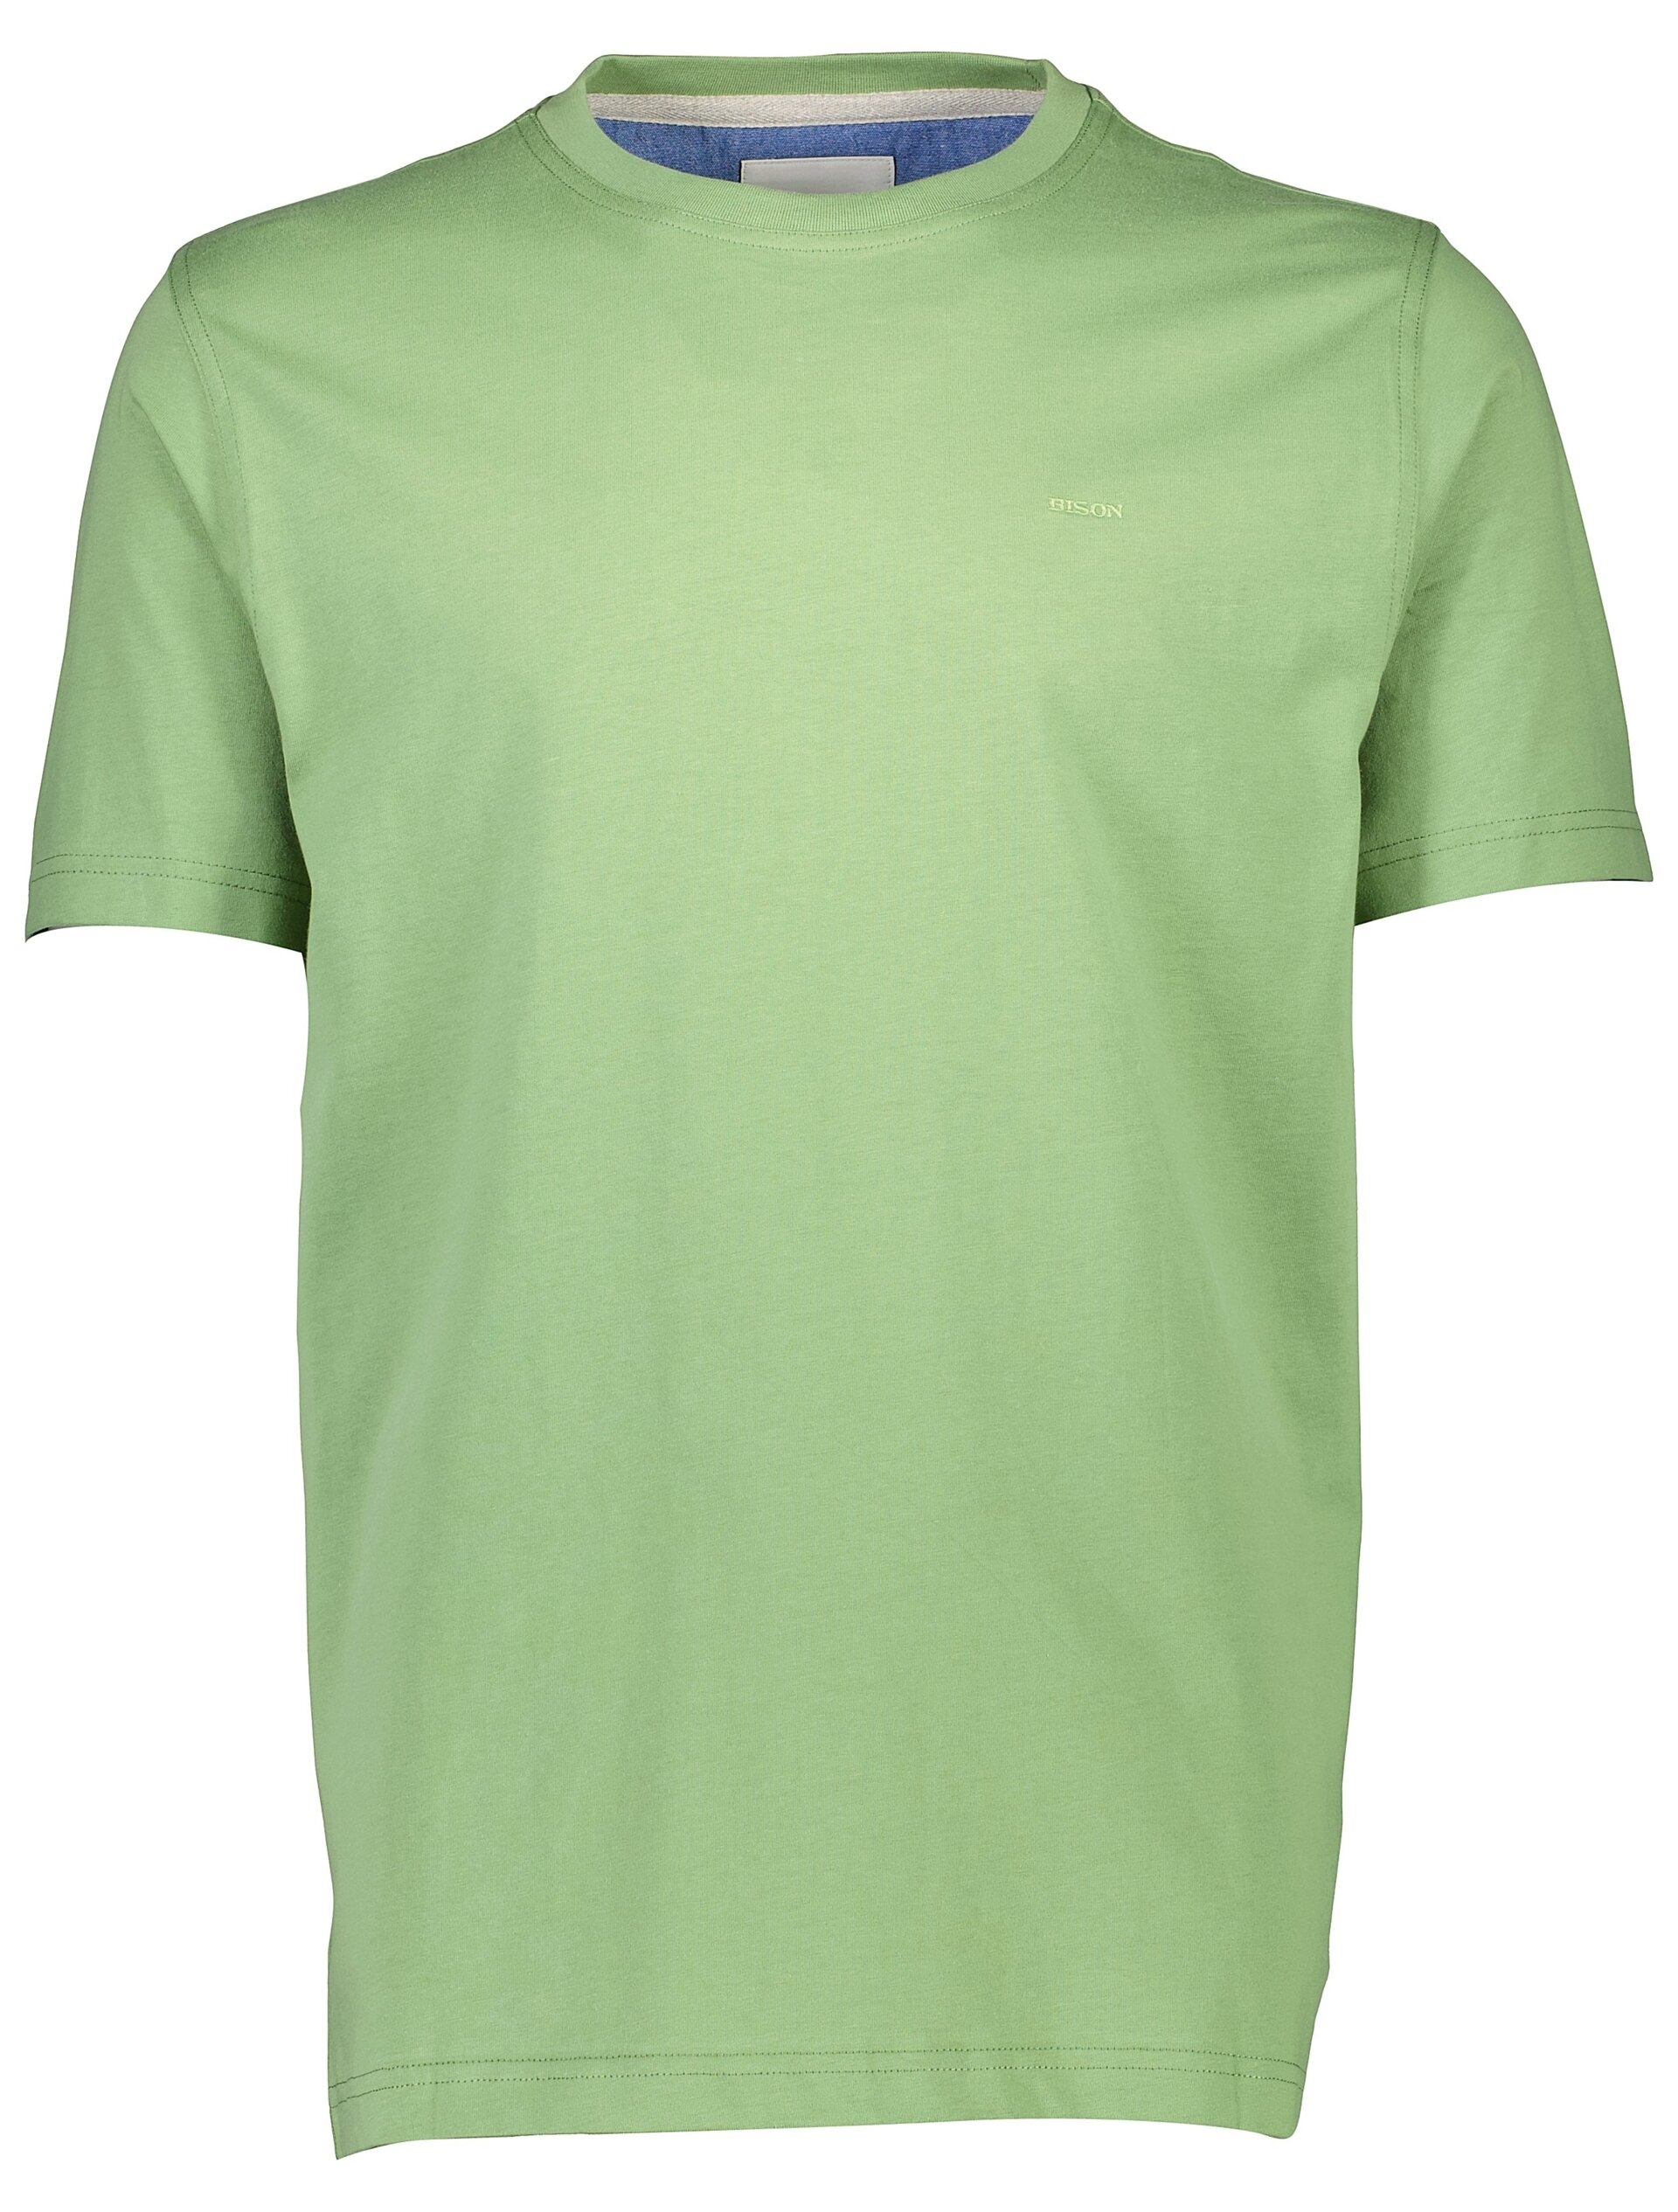 Bison T-shirt grøn / lt green 224